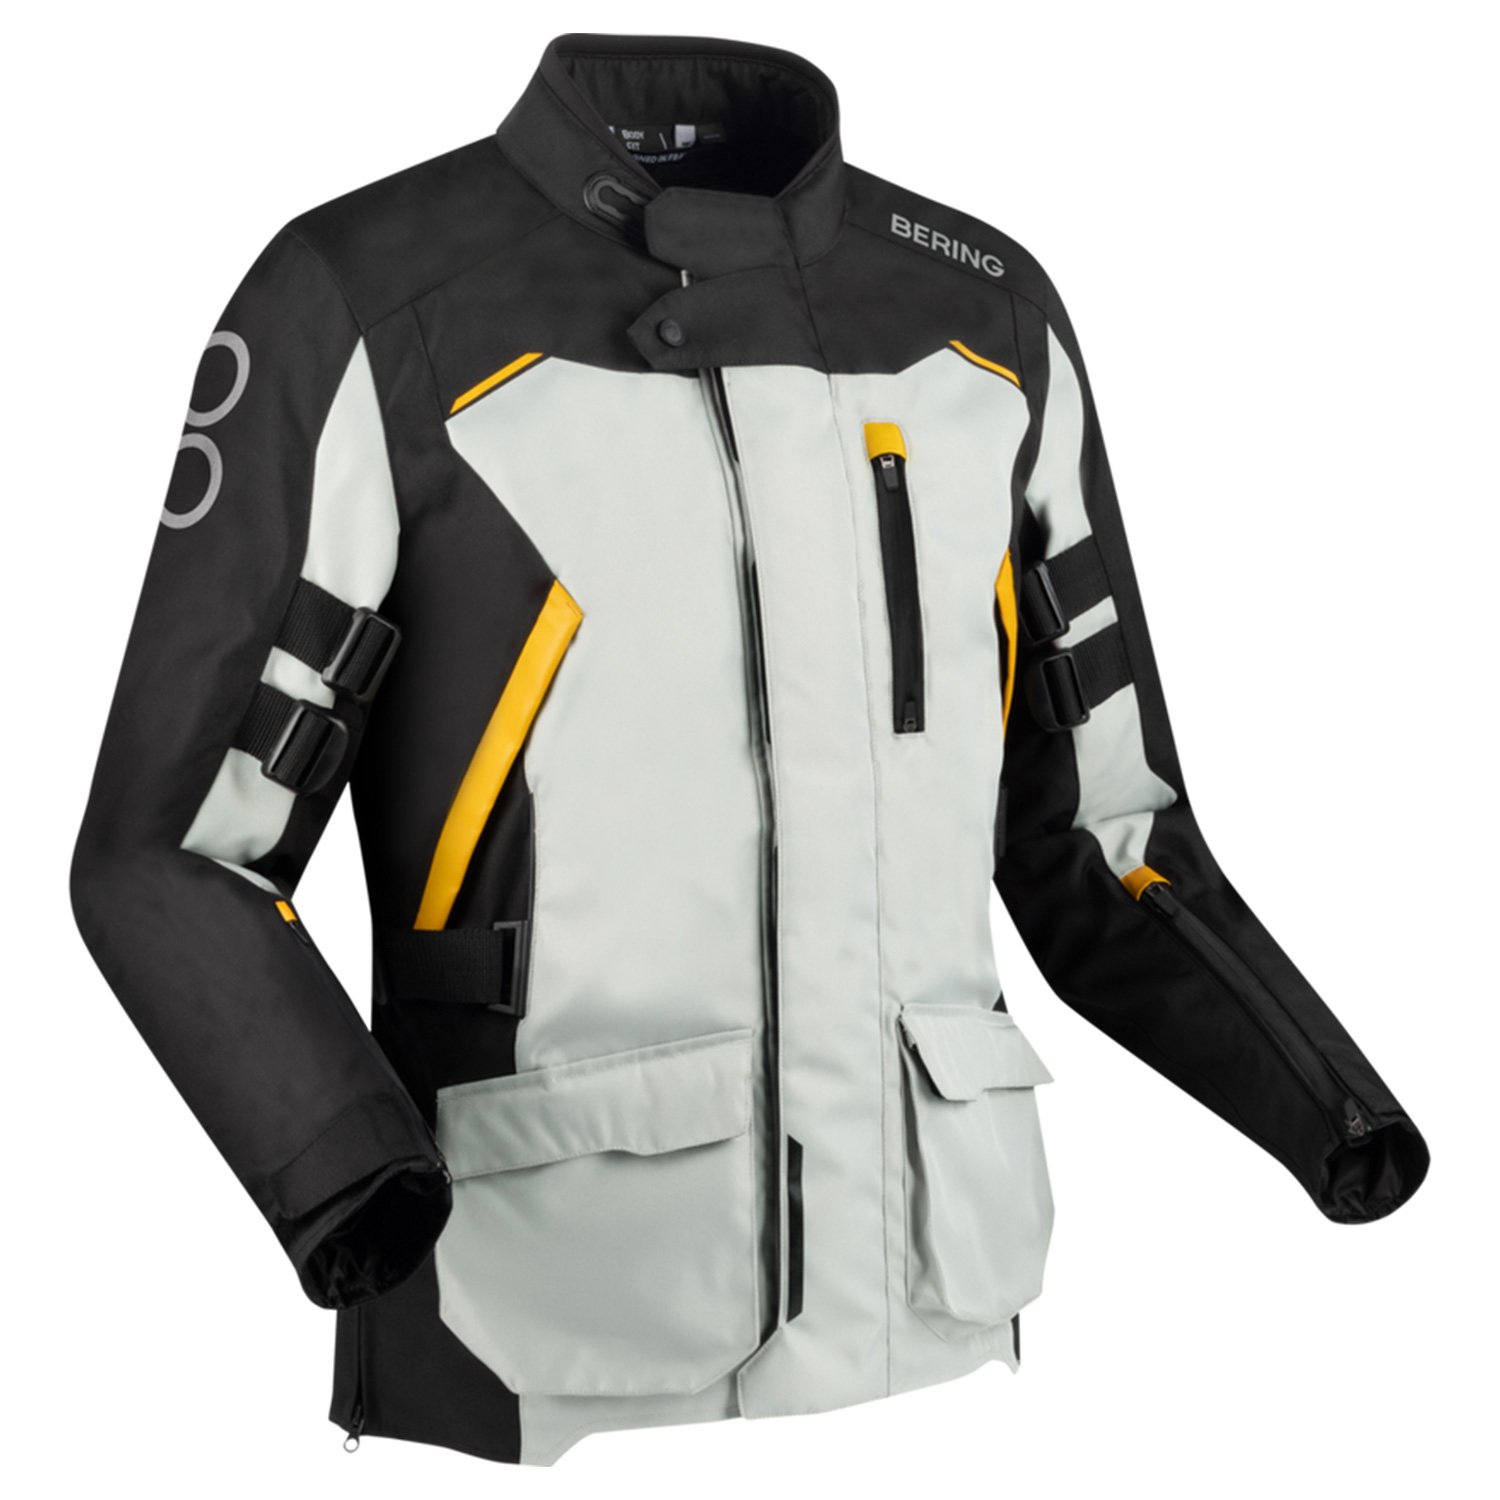 Image of Bering Zephyr Jacket Black Grey Yellow Size XL ID 3660815181102